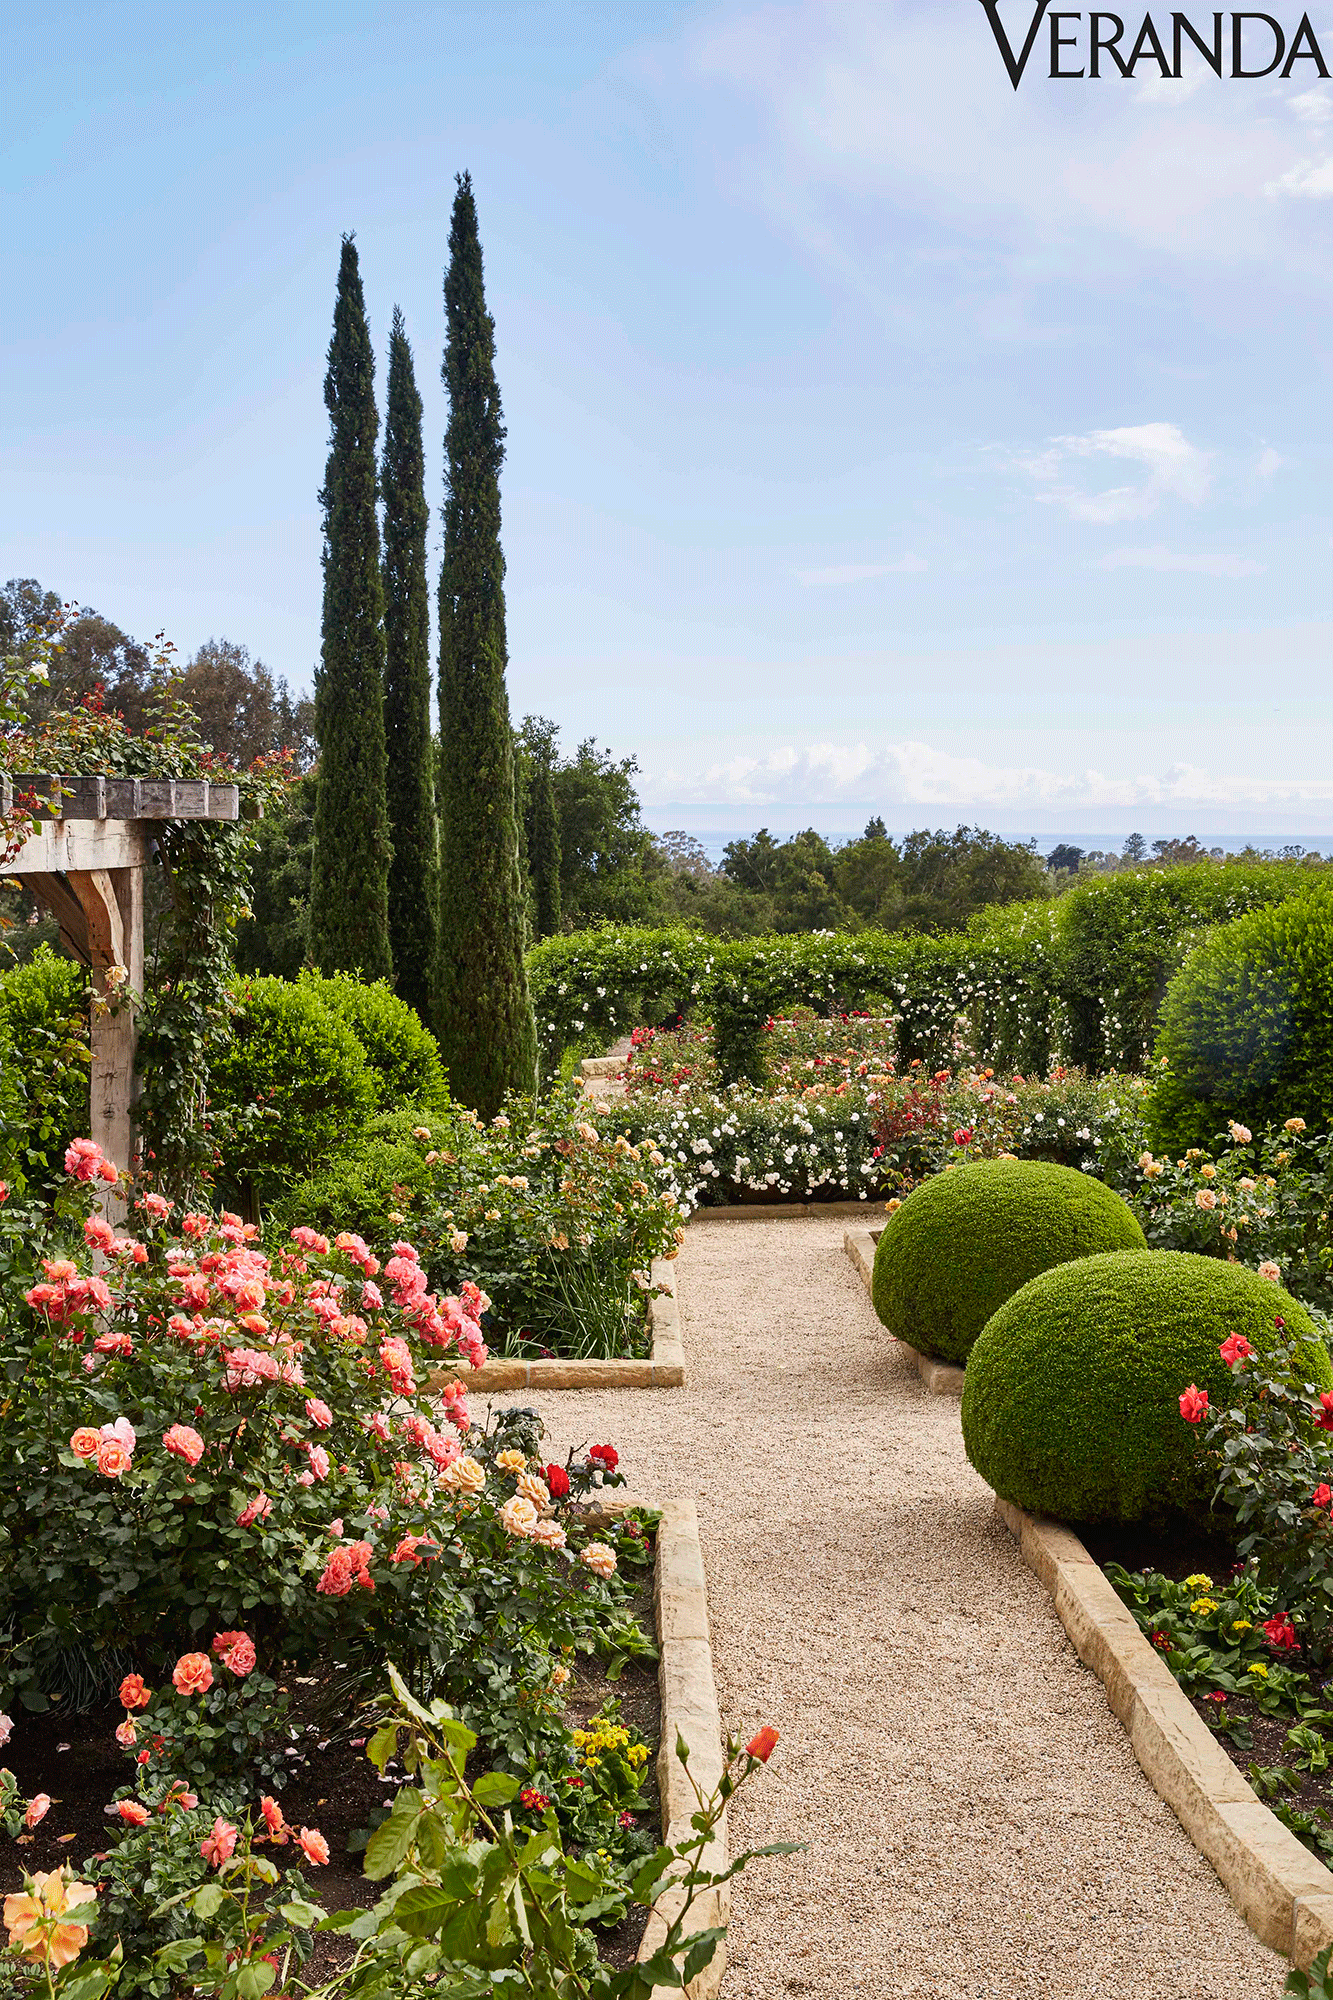 Oprah's Santa Barbara Rose Garden | PEOPLE.com